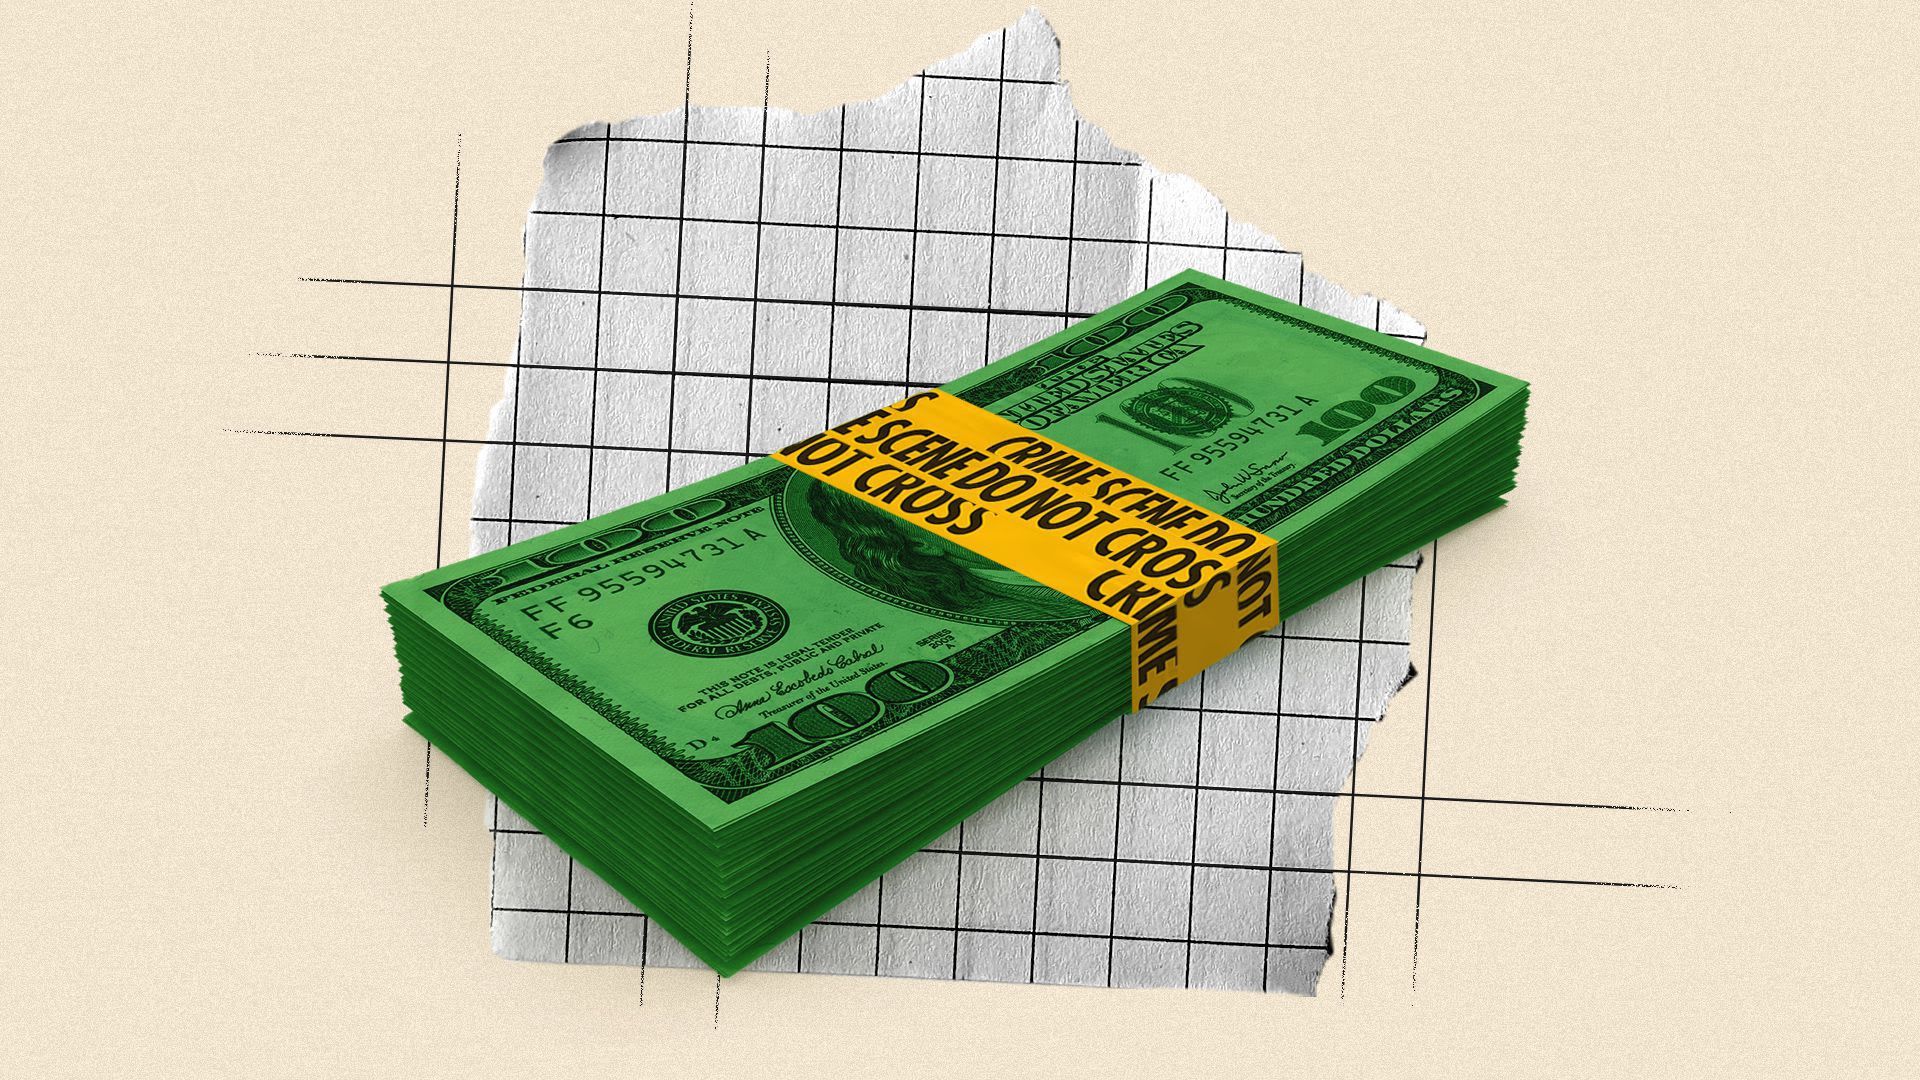 Illustration of a stock of $100 bills held together by "crime scene" tape.